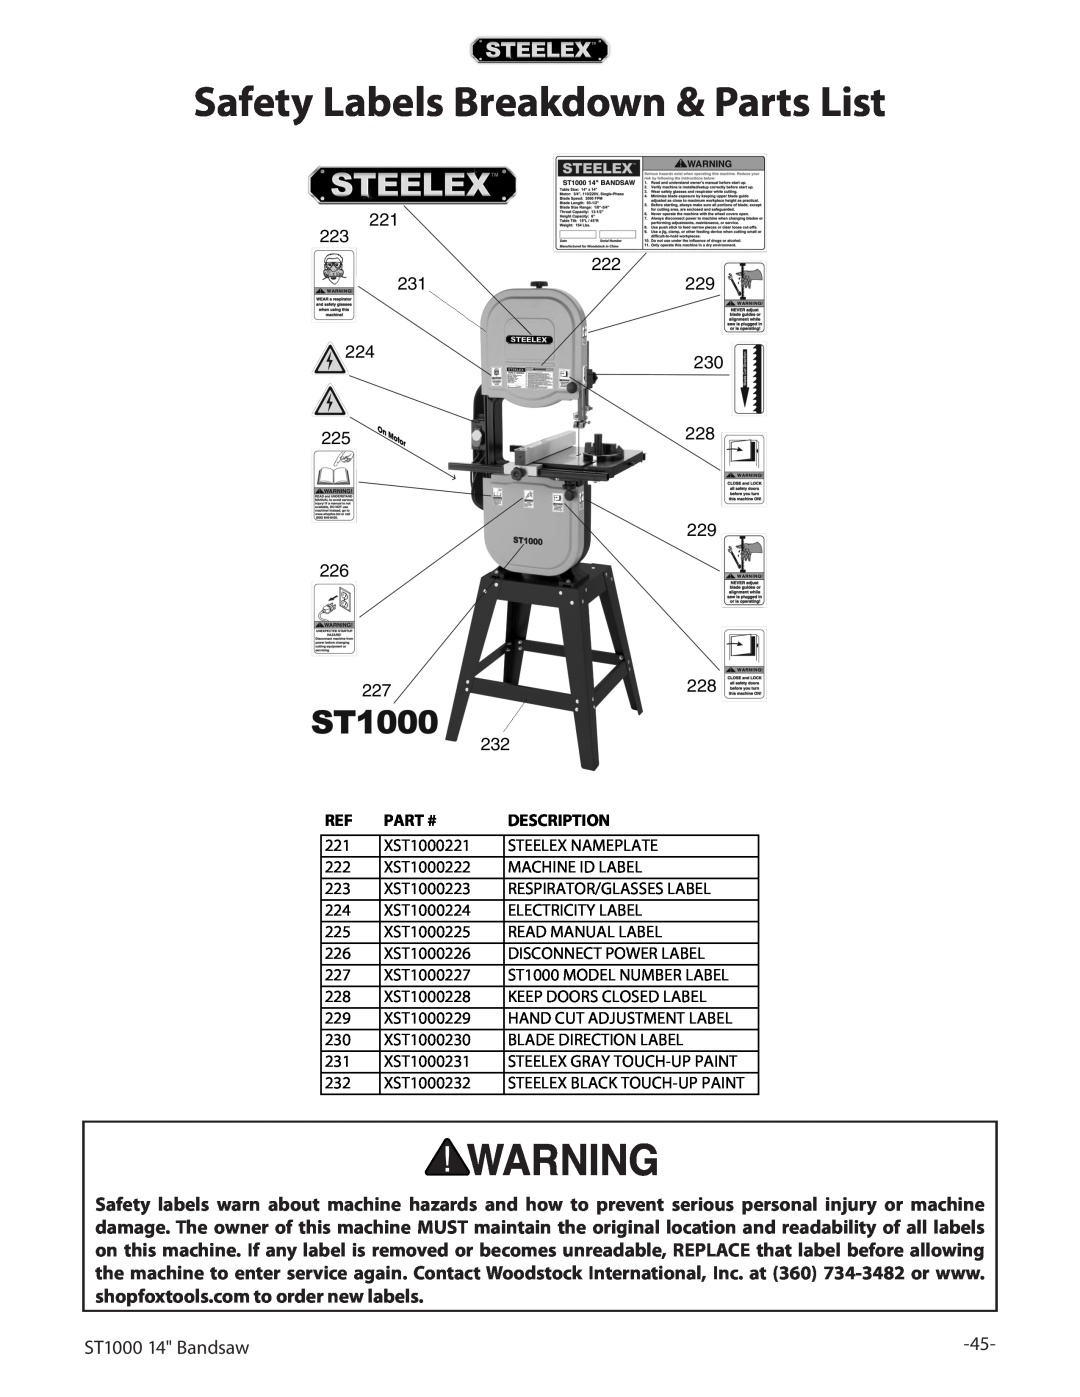 Woodstock ST1000 owner manual Safety Labels Breakdown & Parts List, Part #, Description 